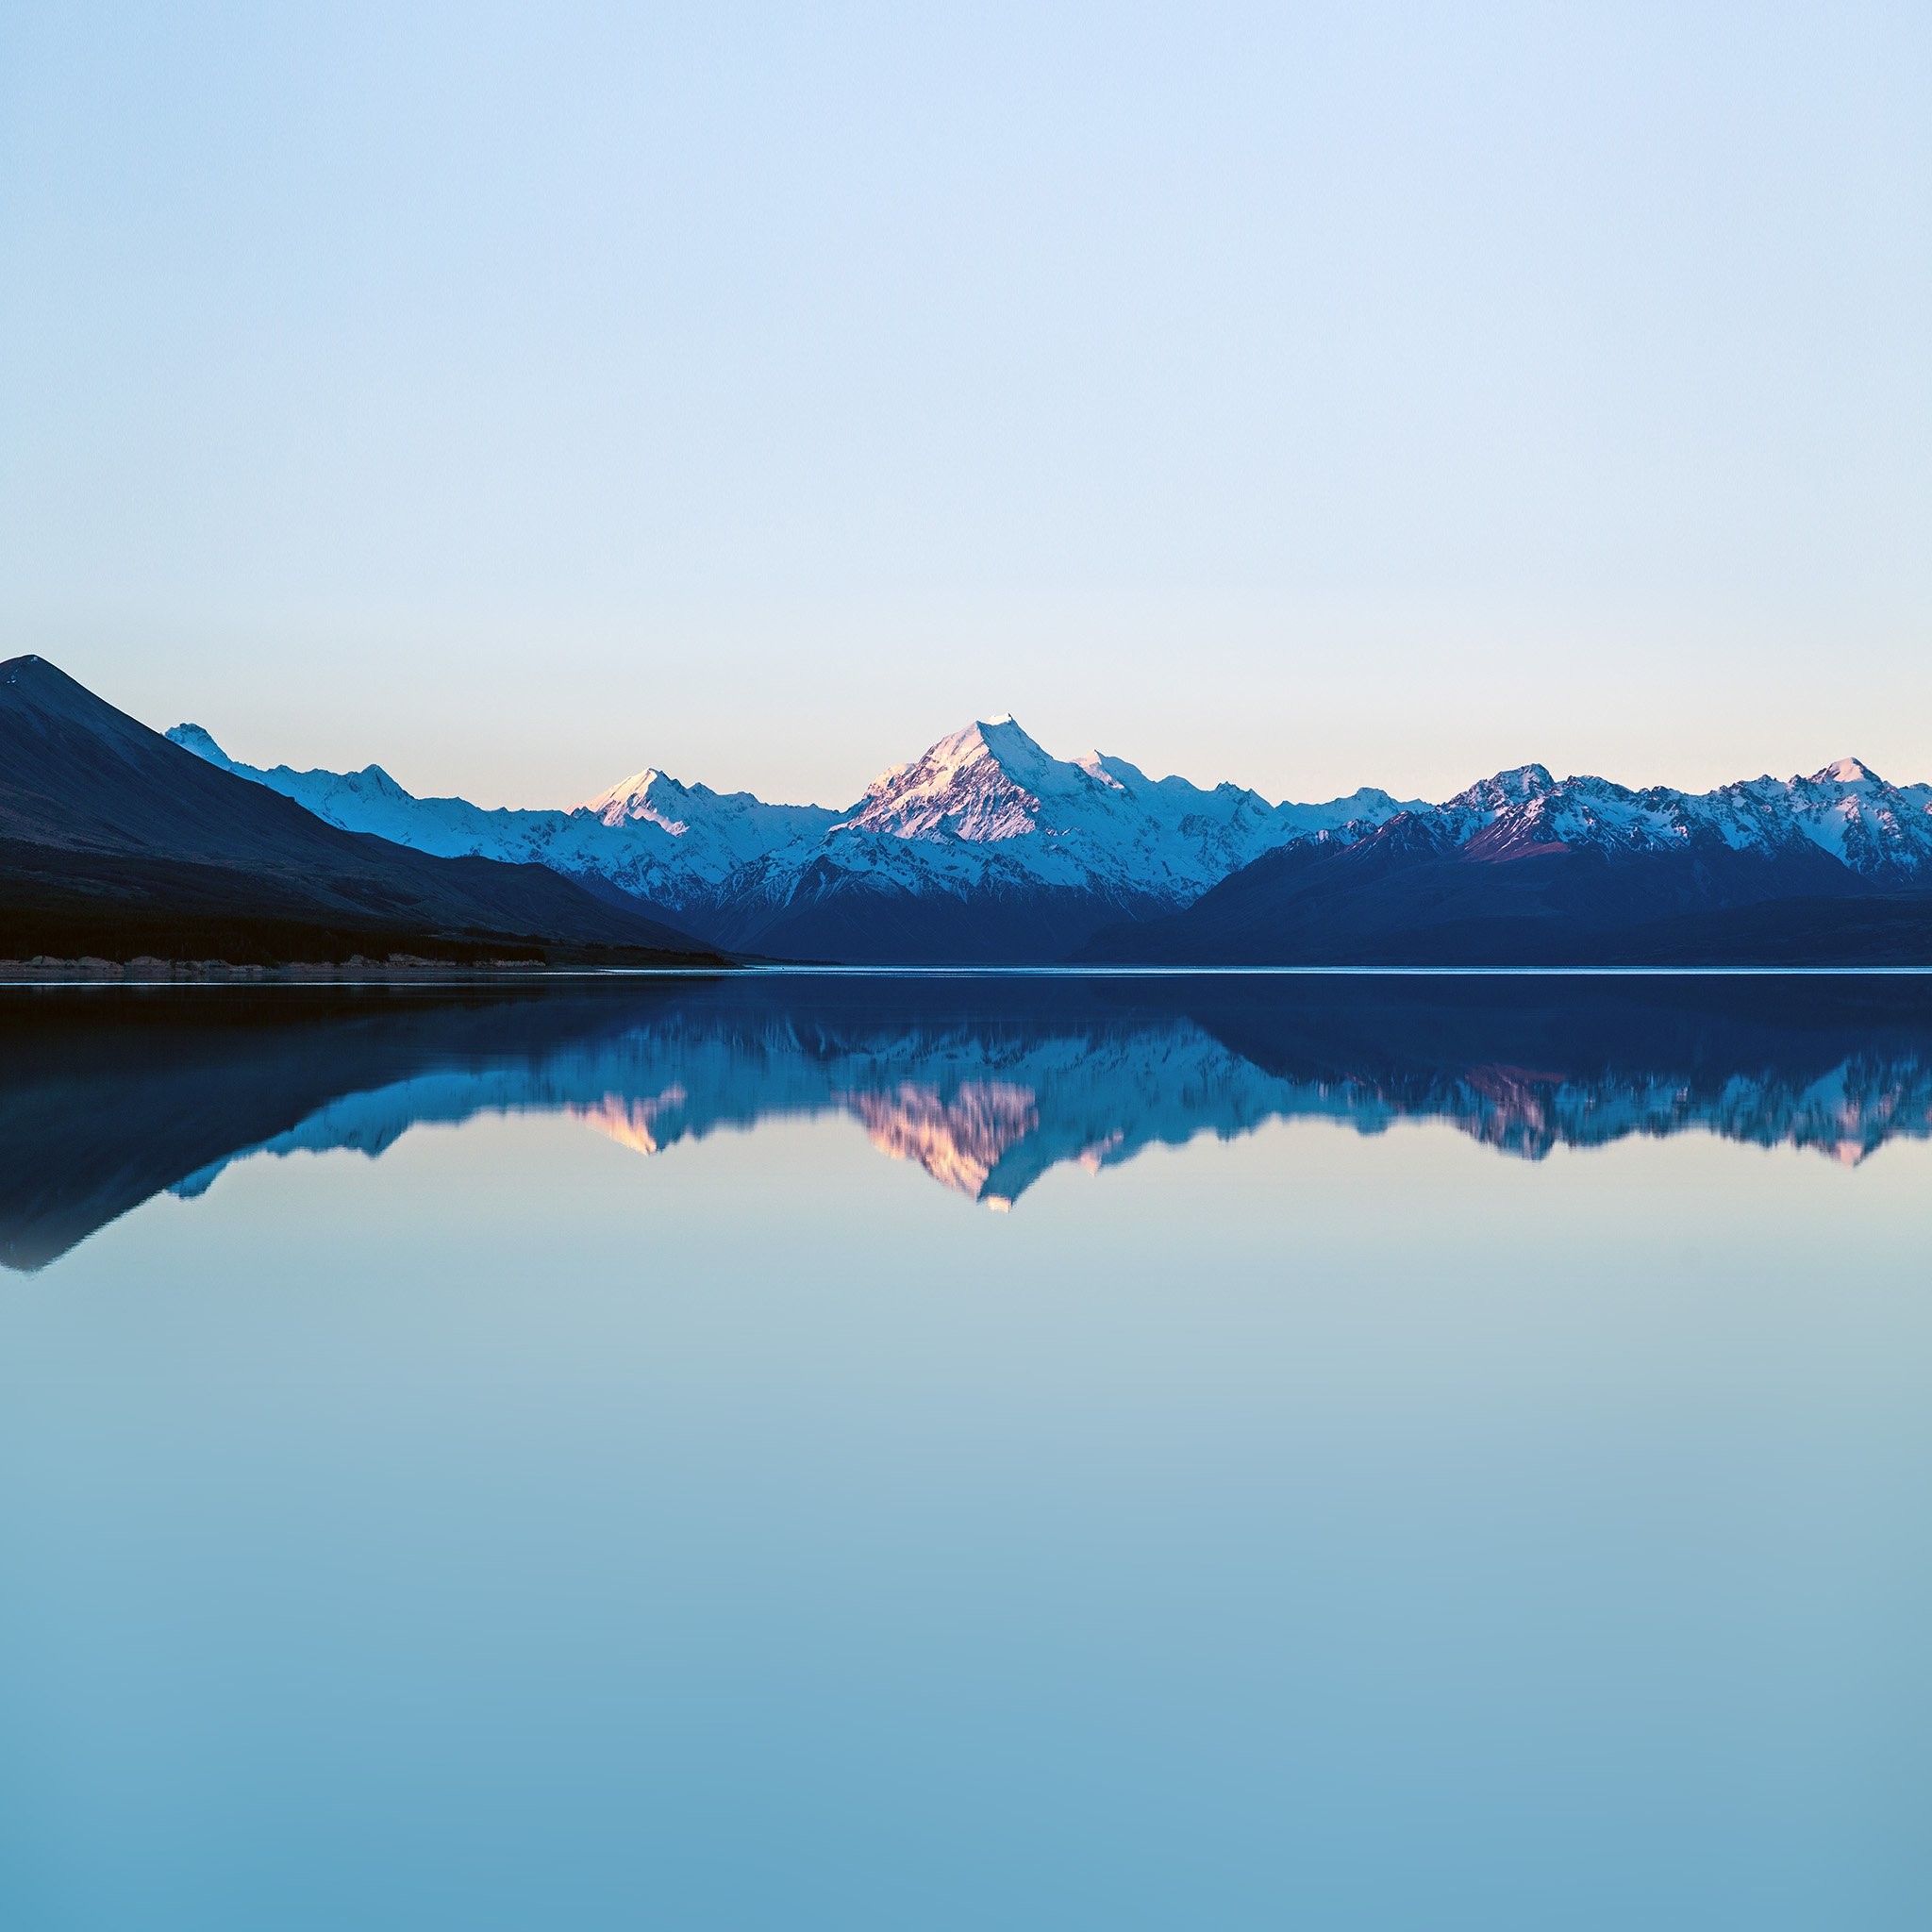 2048x2048 1743 2: Reflection Lake Blue Mountain Water River Nature iPad Air wallpaper